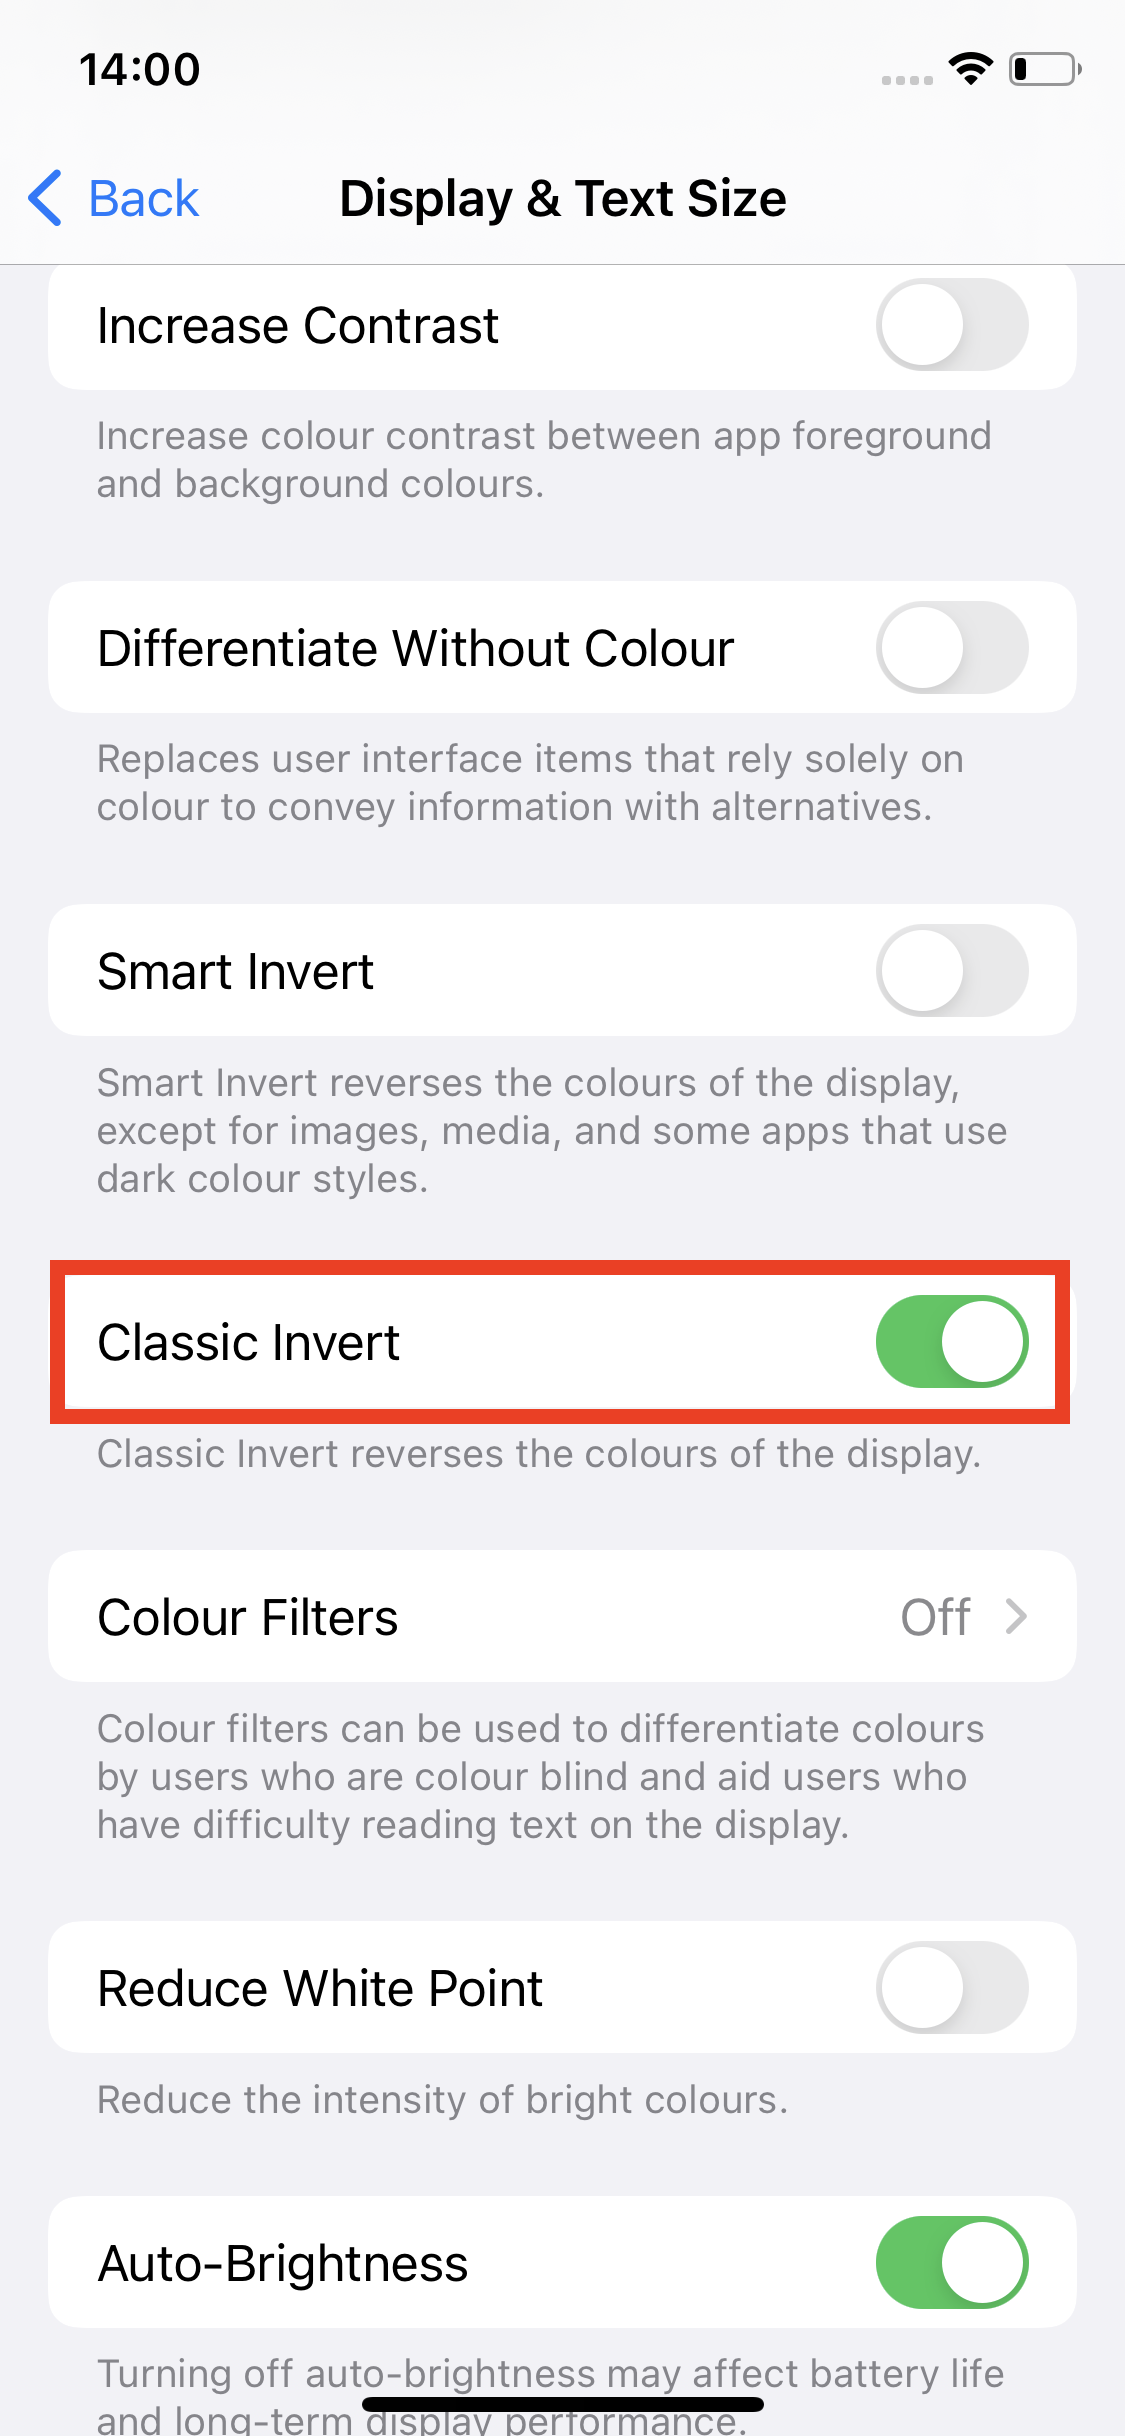 Select 'Classic Invert'